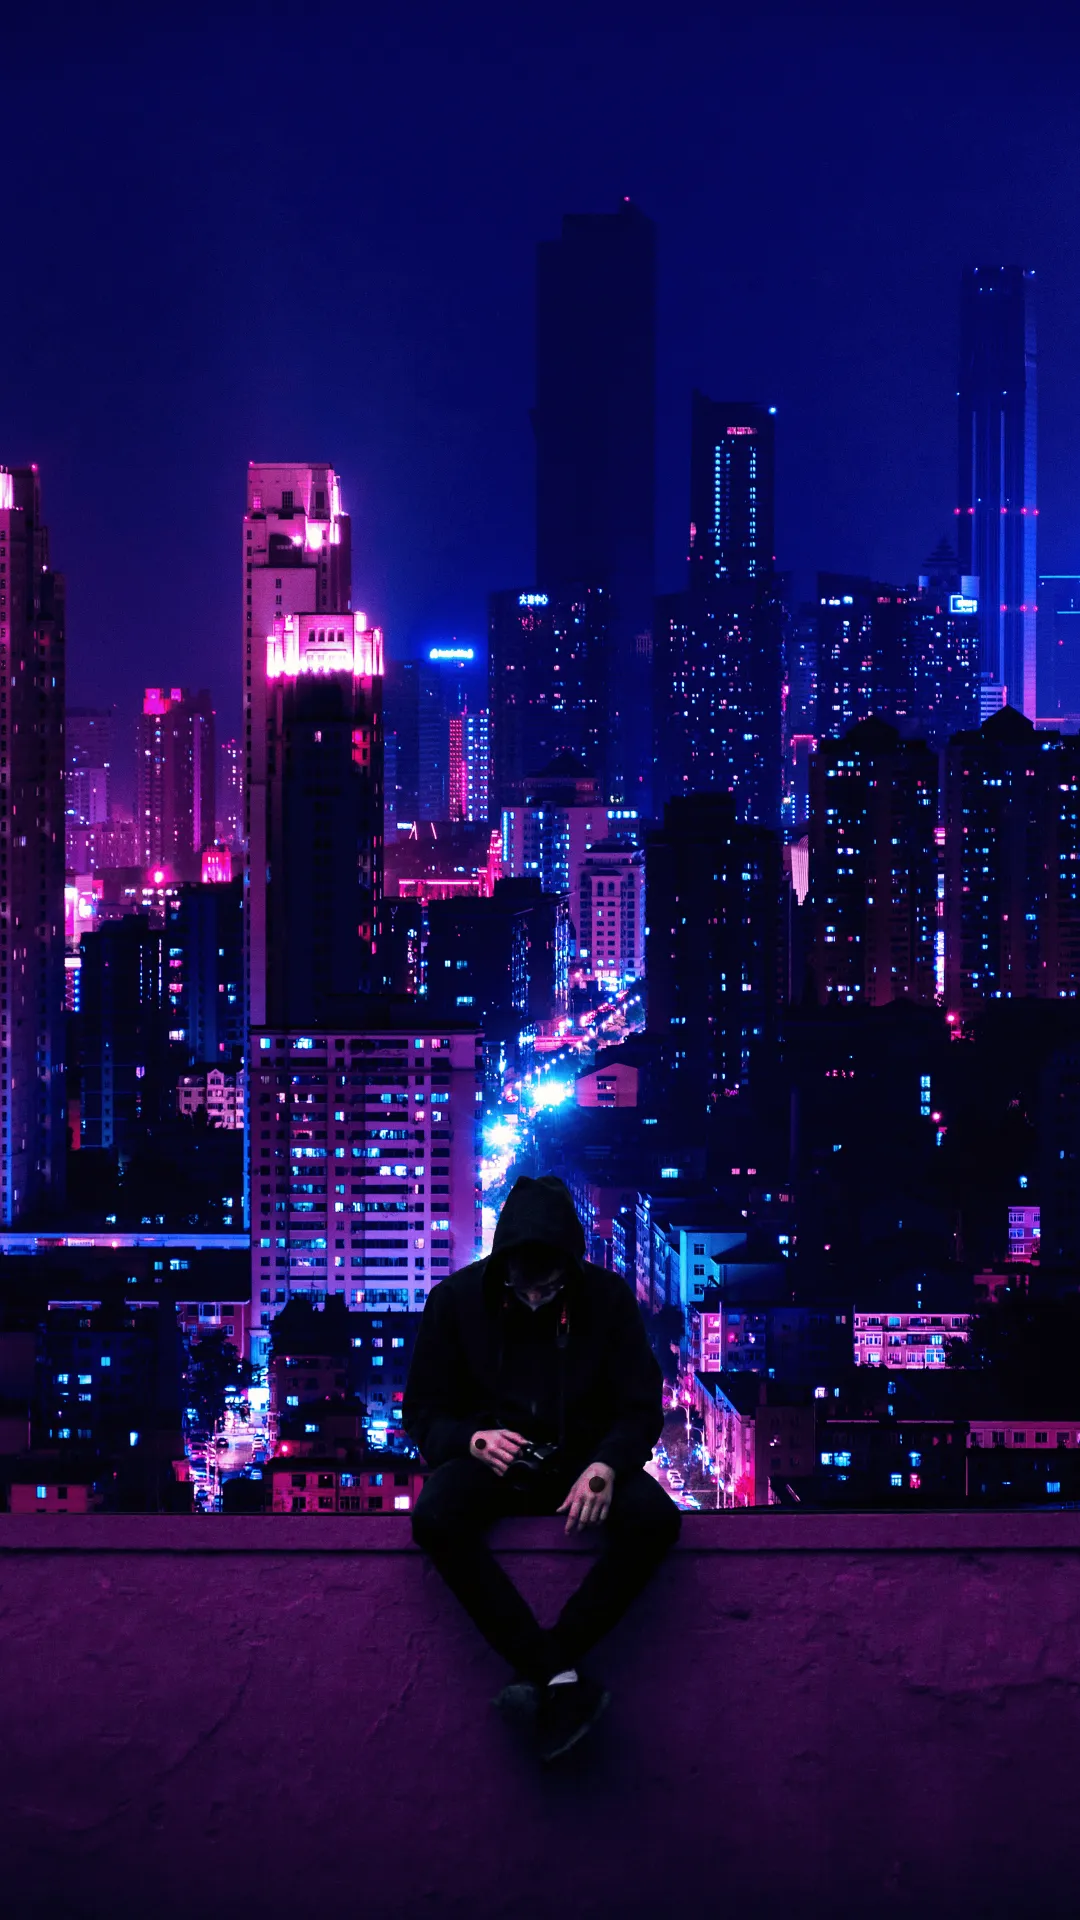 thumb for Neon Alone Cyberpunk Wallpaper